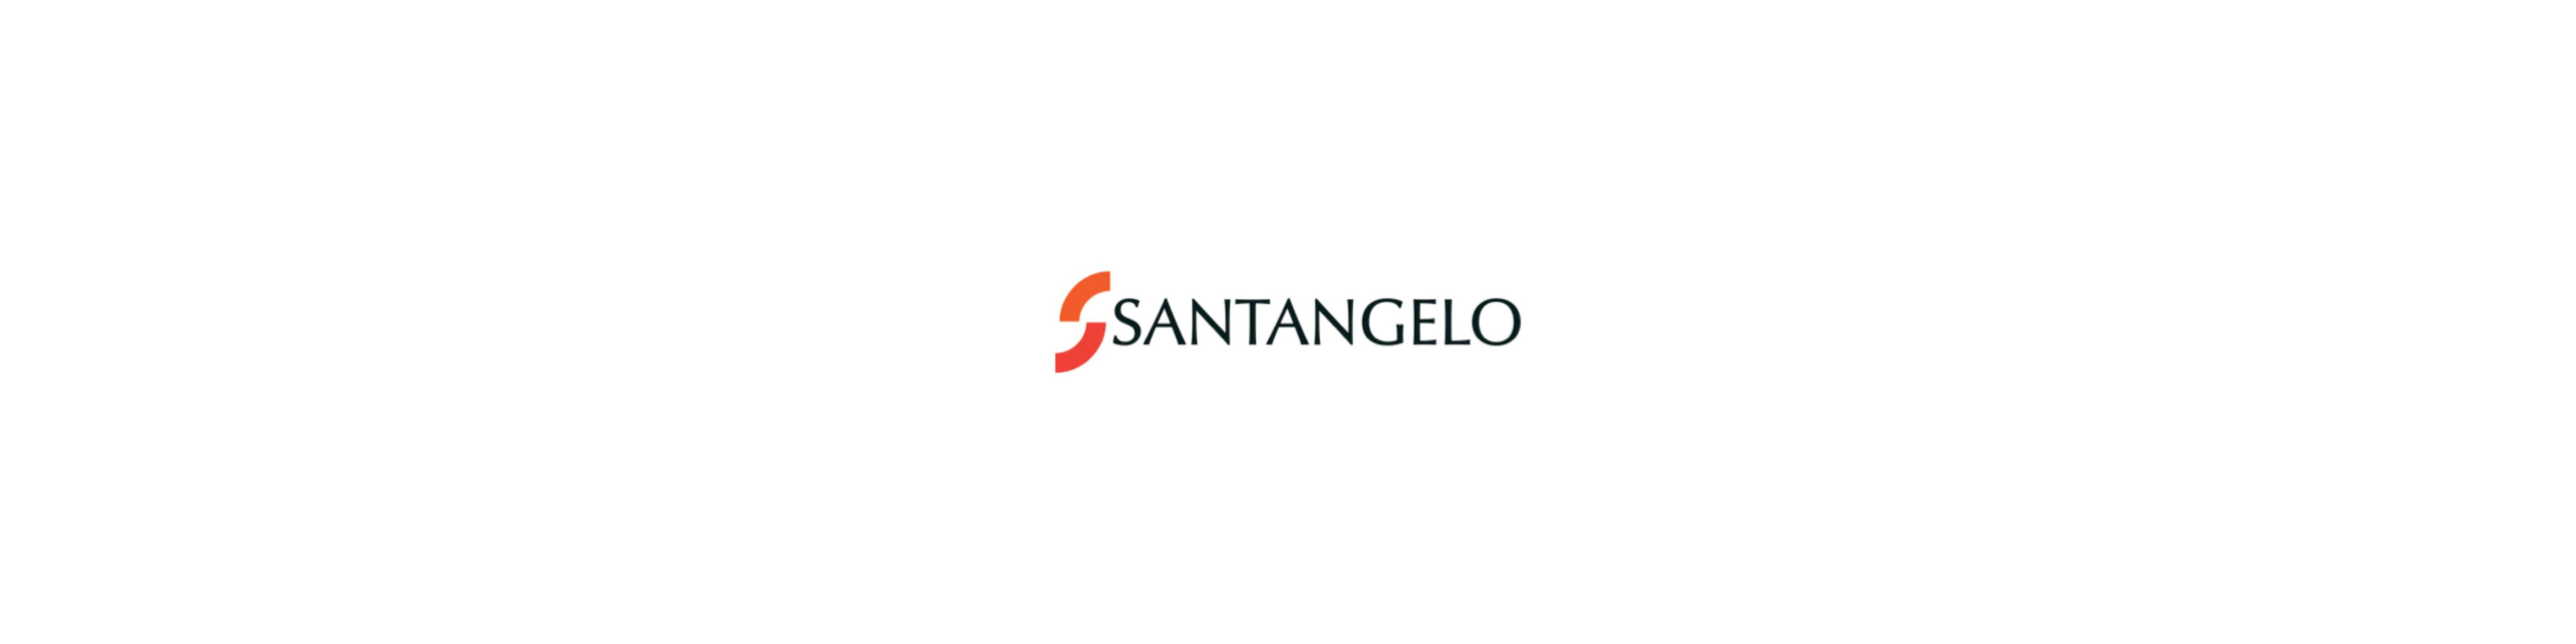 Santangelo (In promozione)